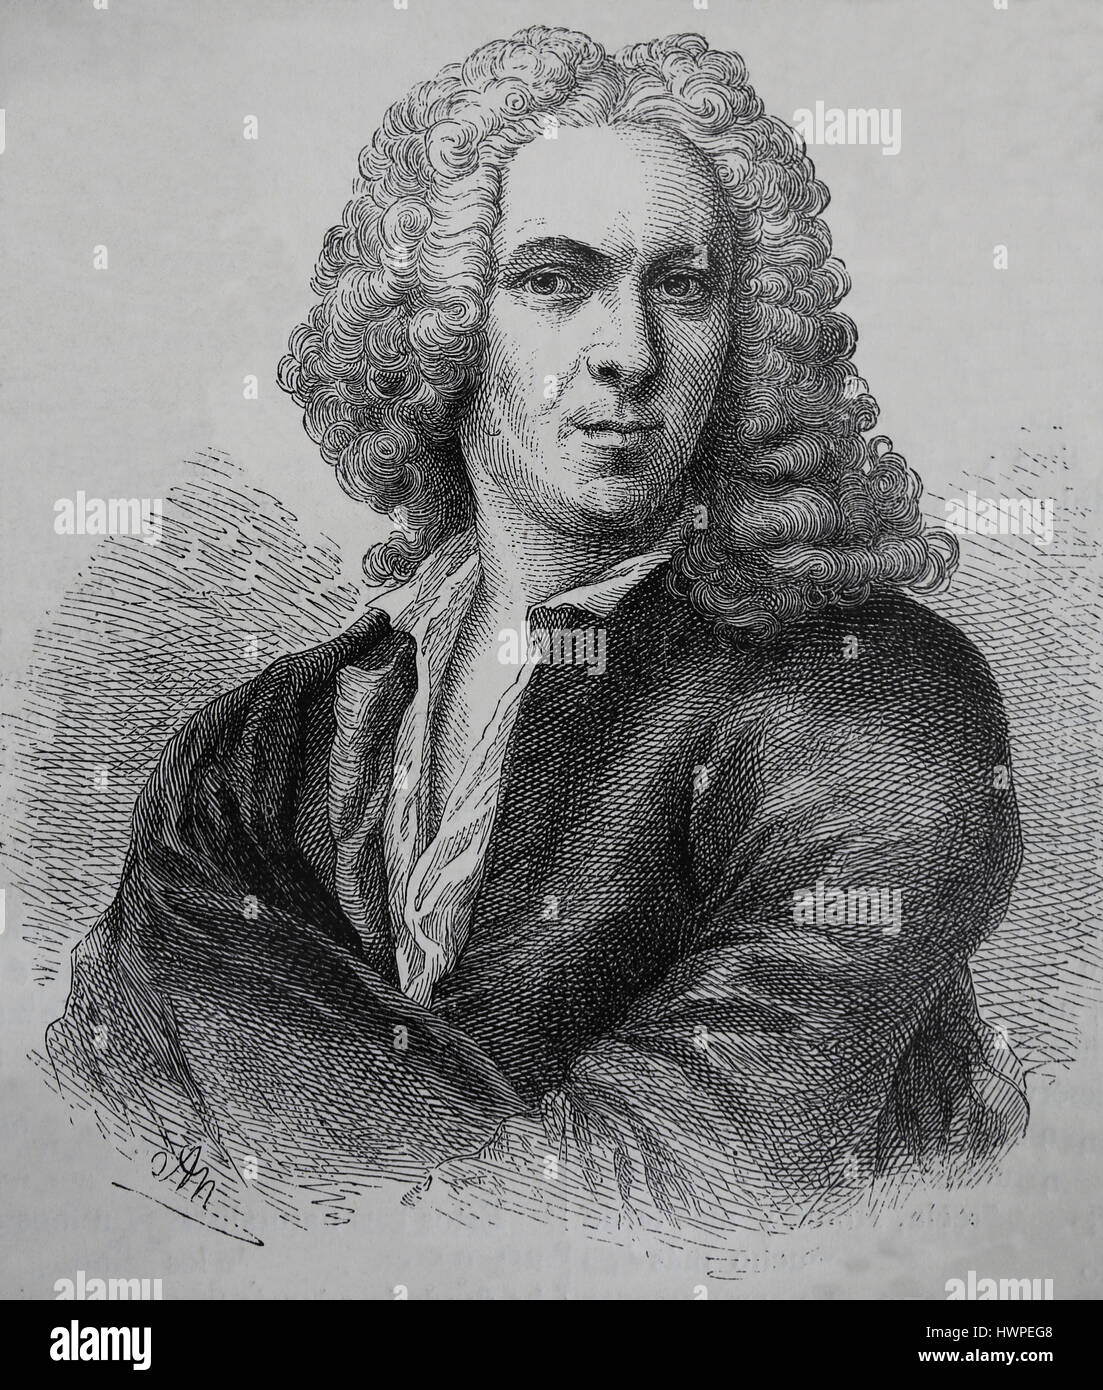 Carl Linnaeus (1707-1778). Swedish botanist, physician and zoologist. Portrait. Engraving, 1883. . Stock Photo